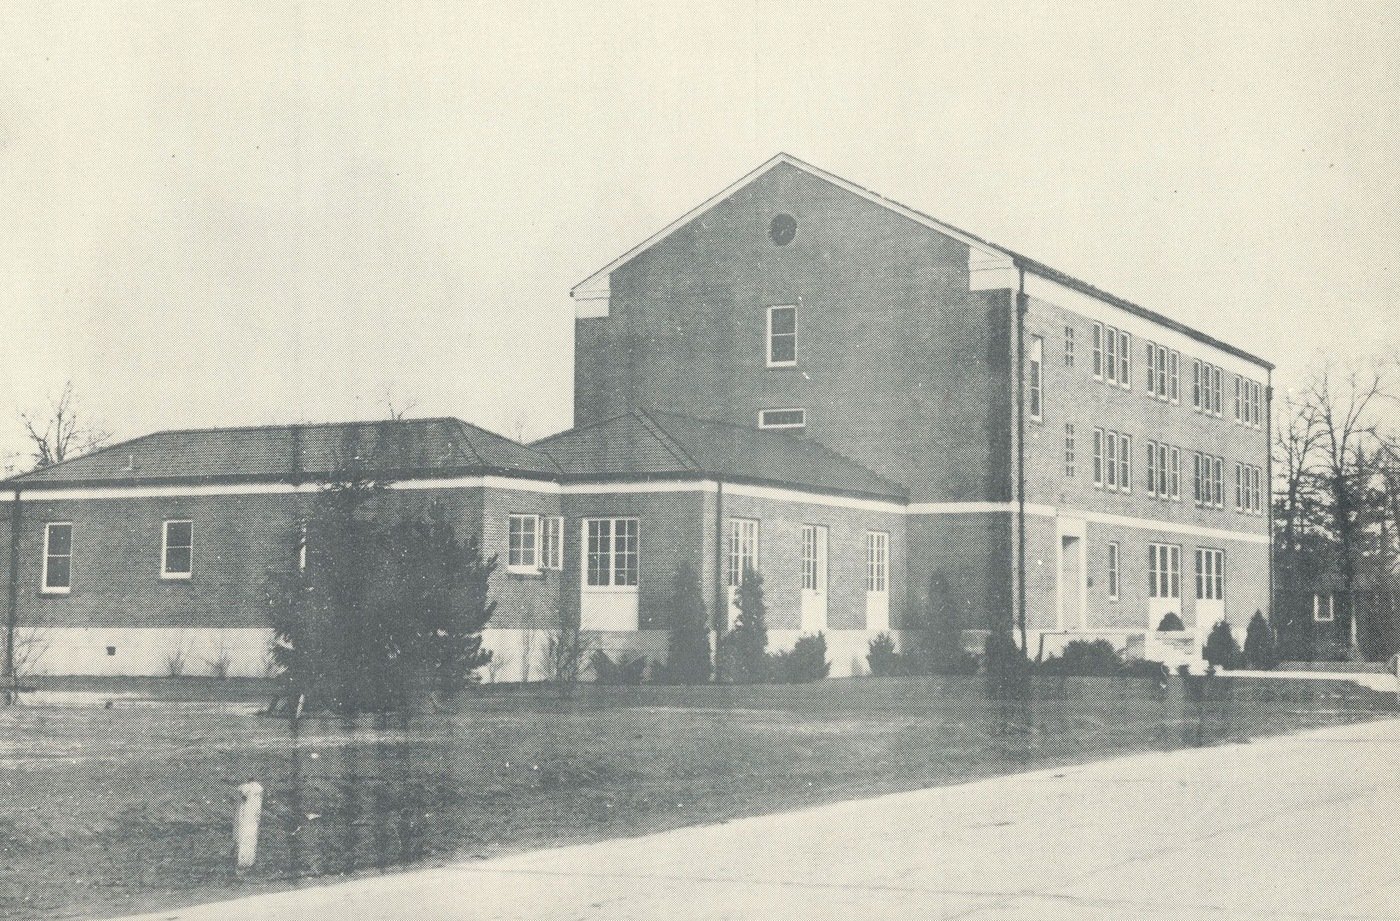 FBI Academy Building circa 1940